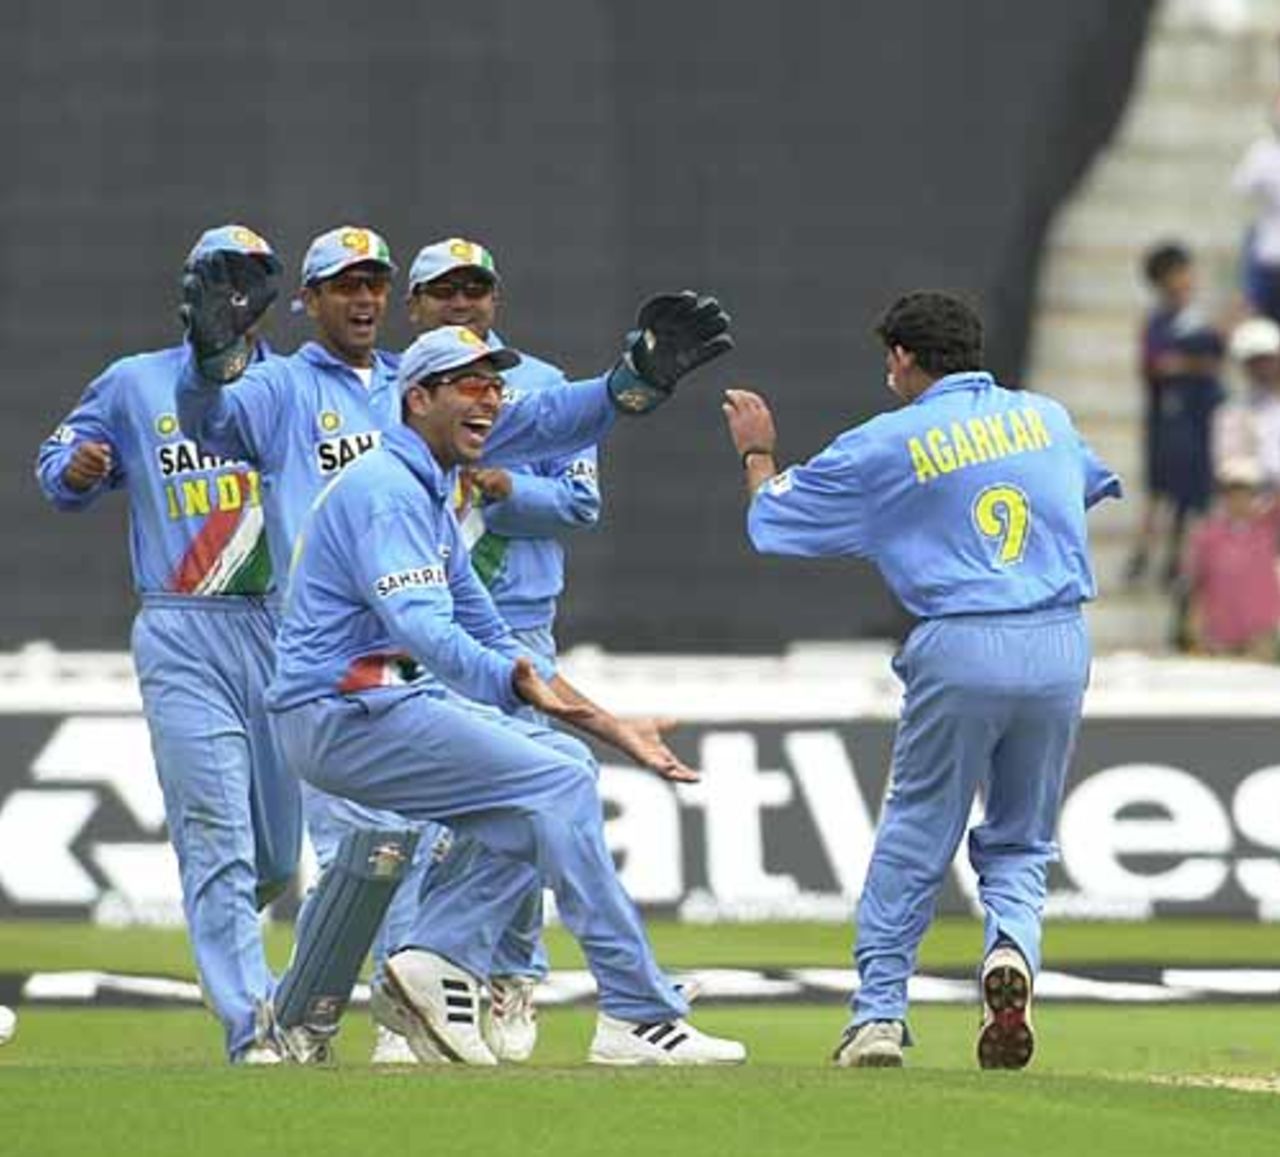 Ajit Agarkar's first ball in the match has accounted for Kaluwitharana, India v Sri Lanka at Birmingham, Julty 2002